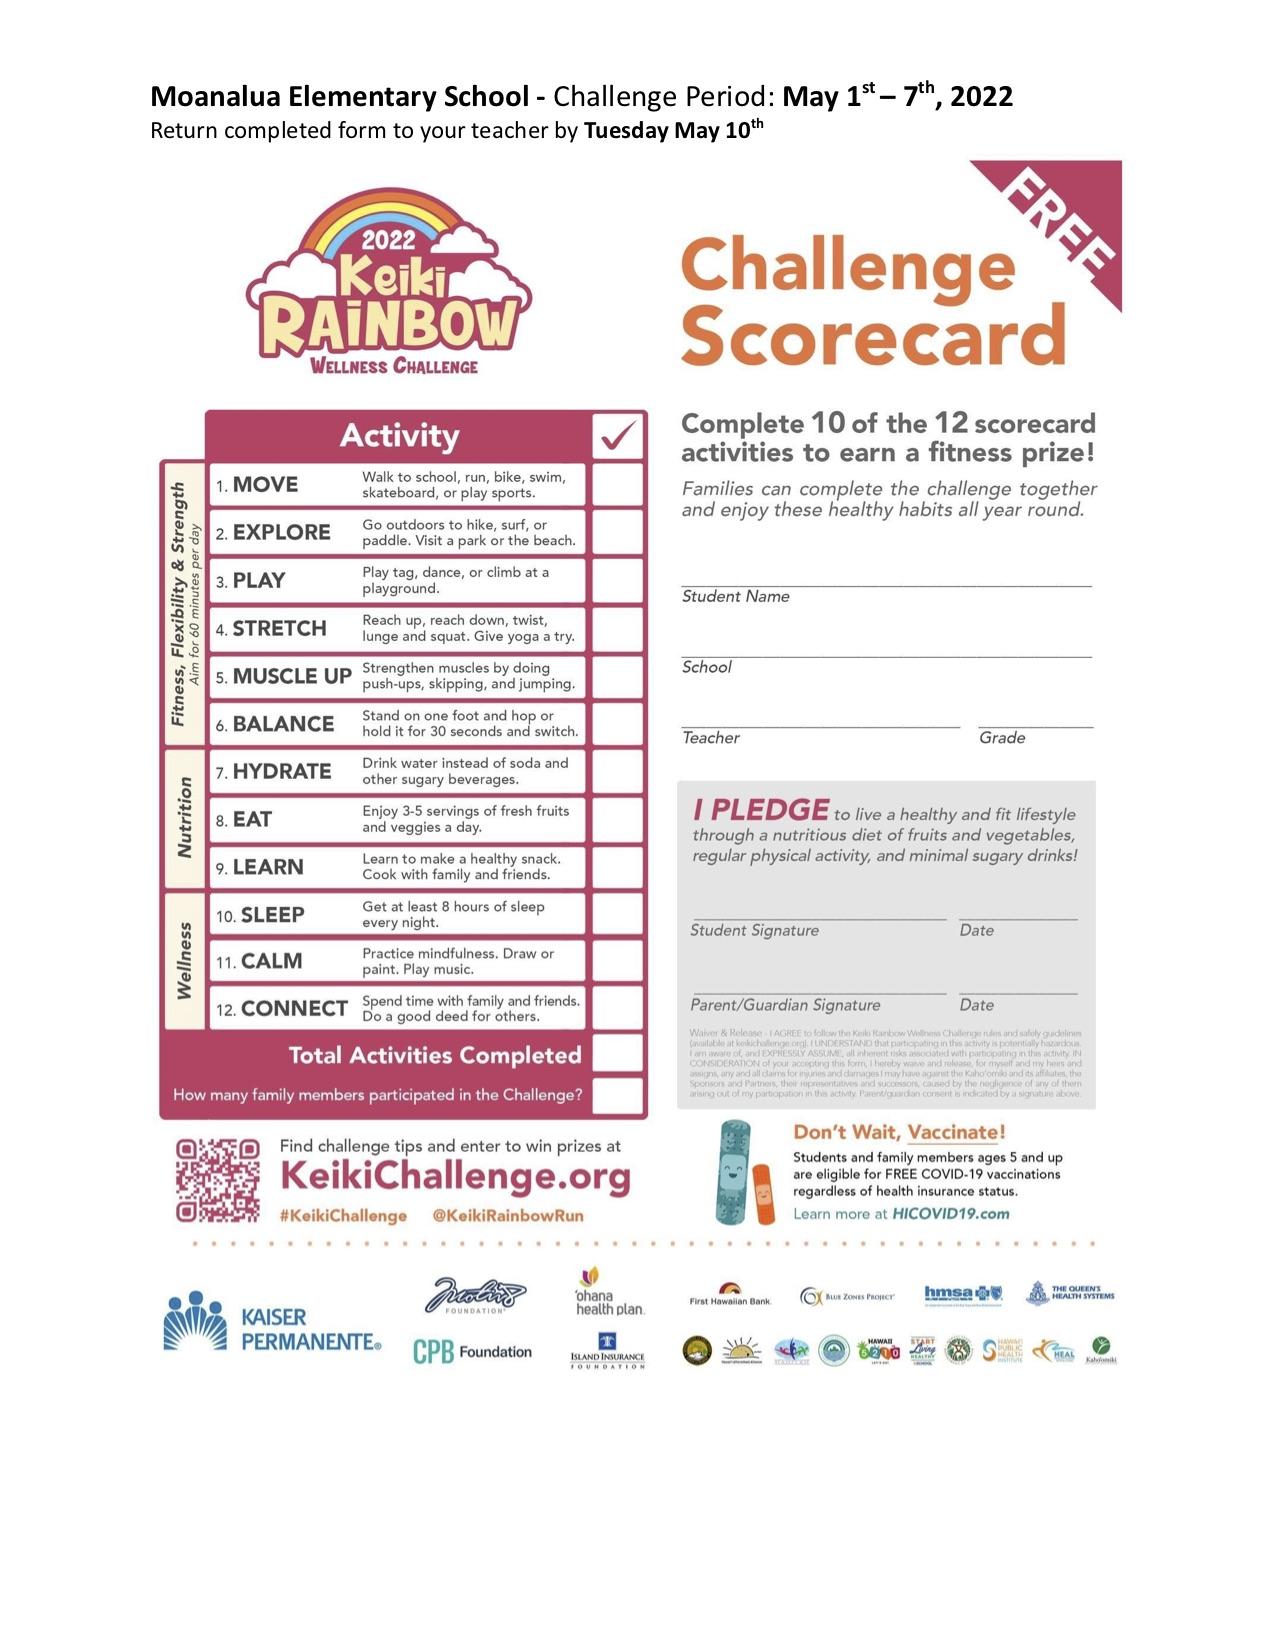 2022 Keiki Rainbow Wellness Challenge page 2